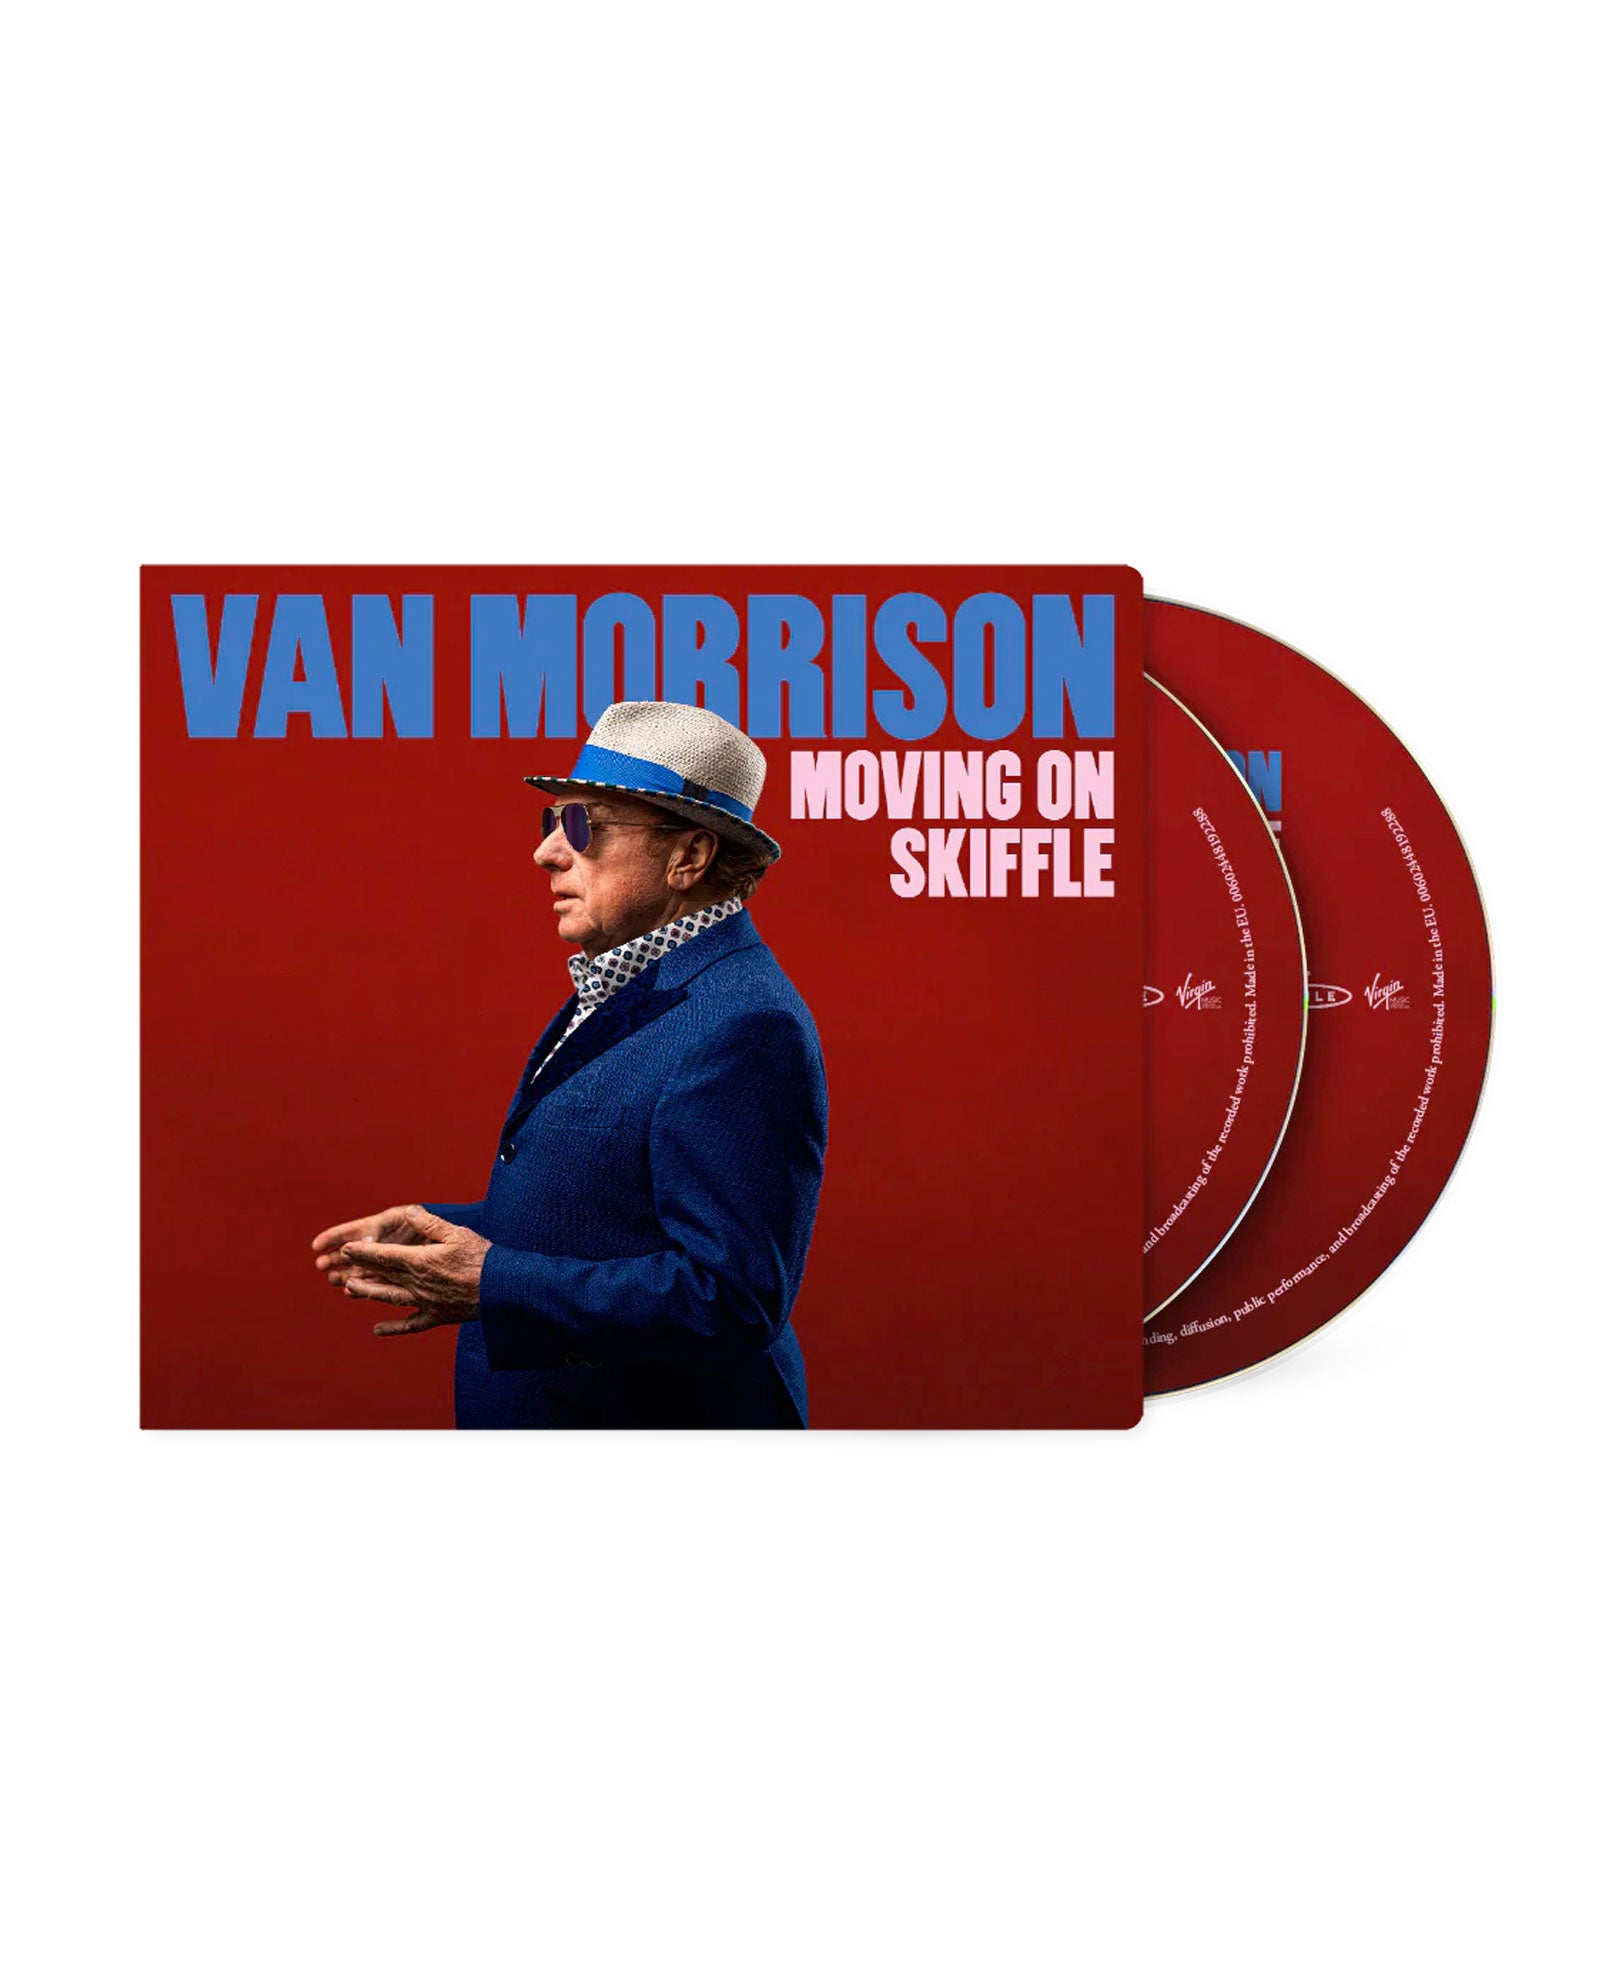 Van Morrison - 2CD "Moving On Skiffle"